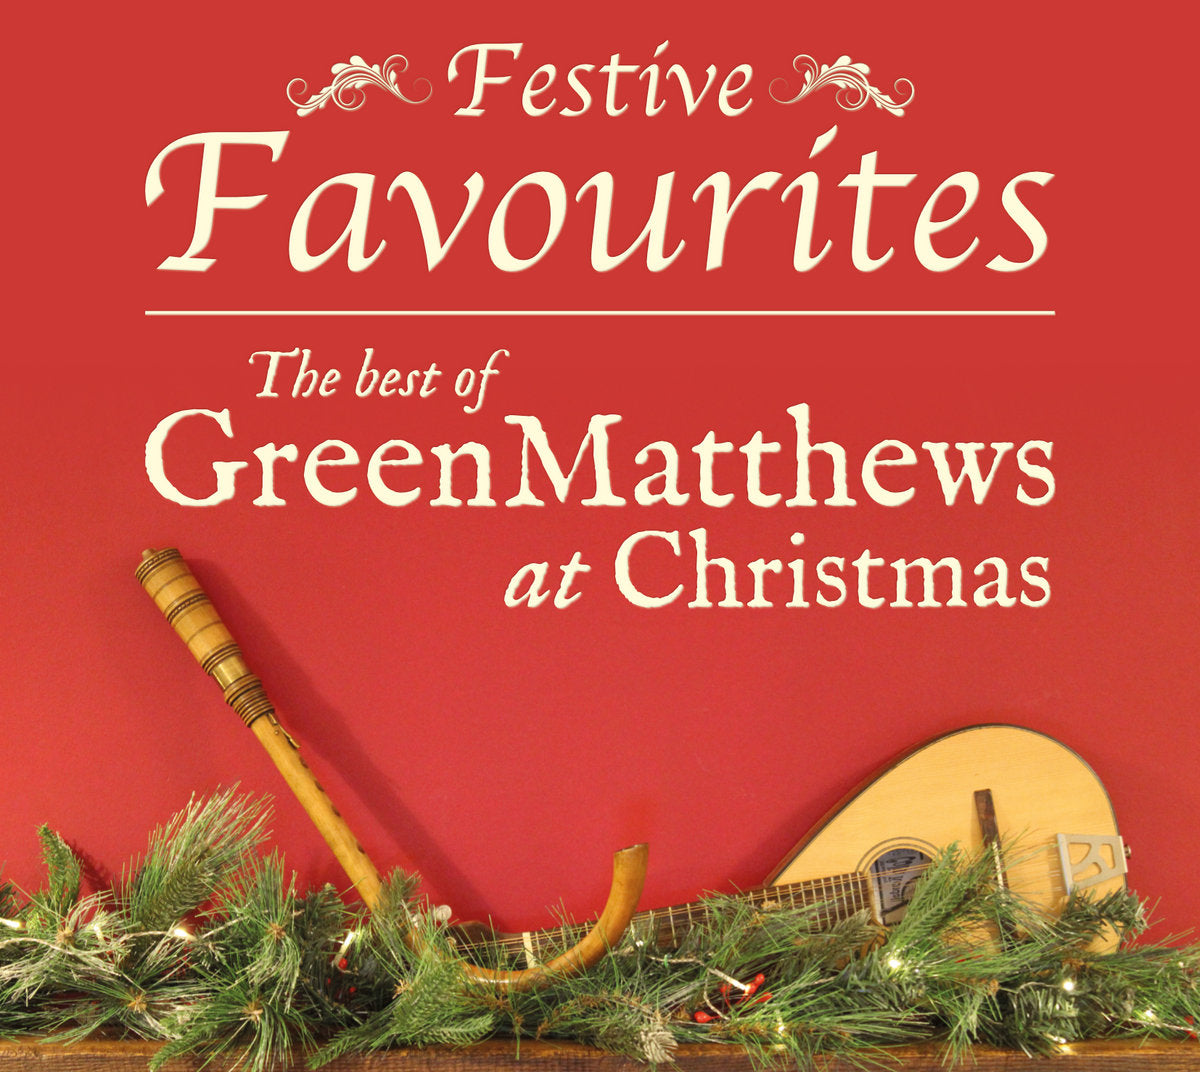 Featured Album December 2023: GreenMatthews "Festive Favourites"